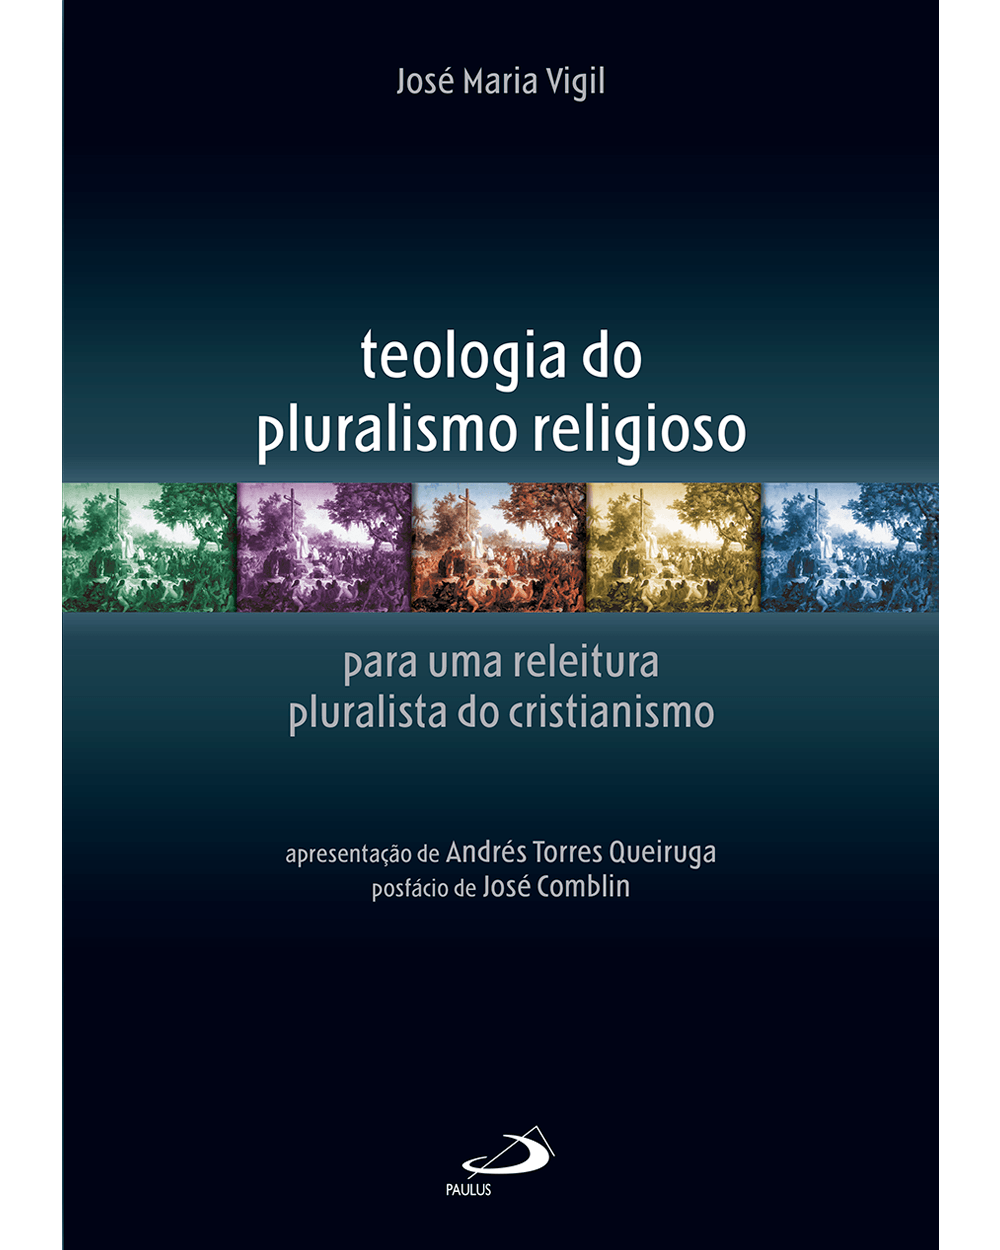 Teologia do pluralismo religioso - Para uma leitura pluralista do cristianismo